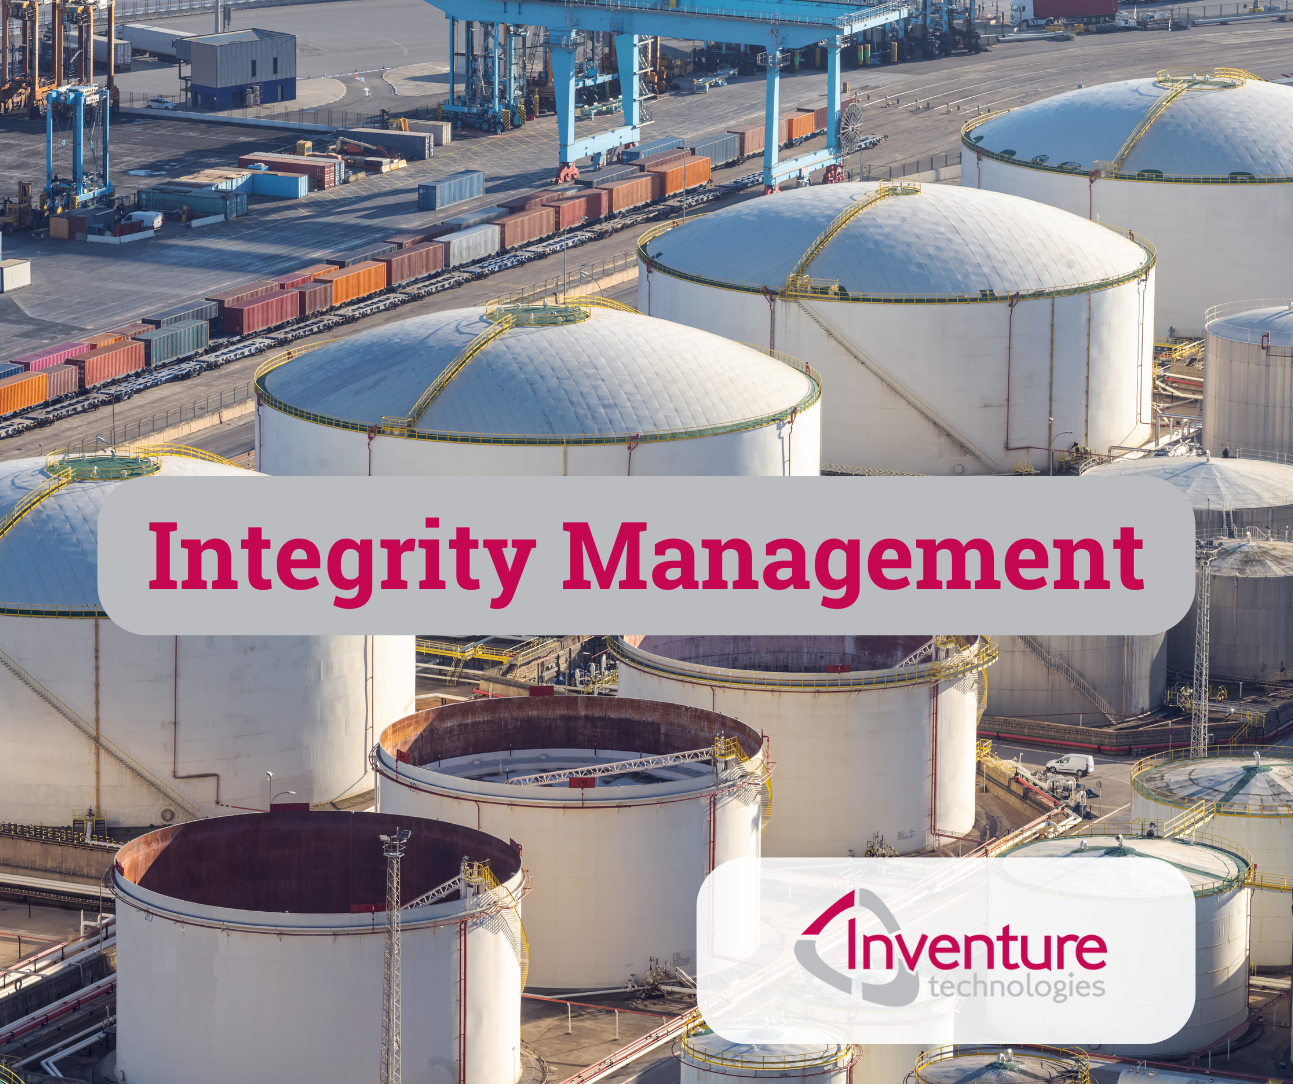 Tank integrity management